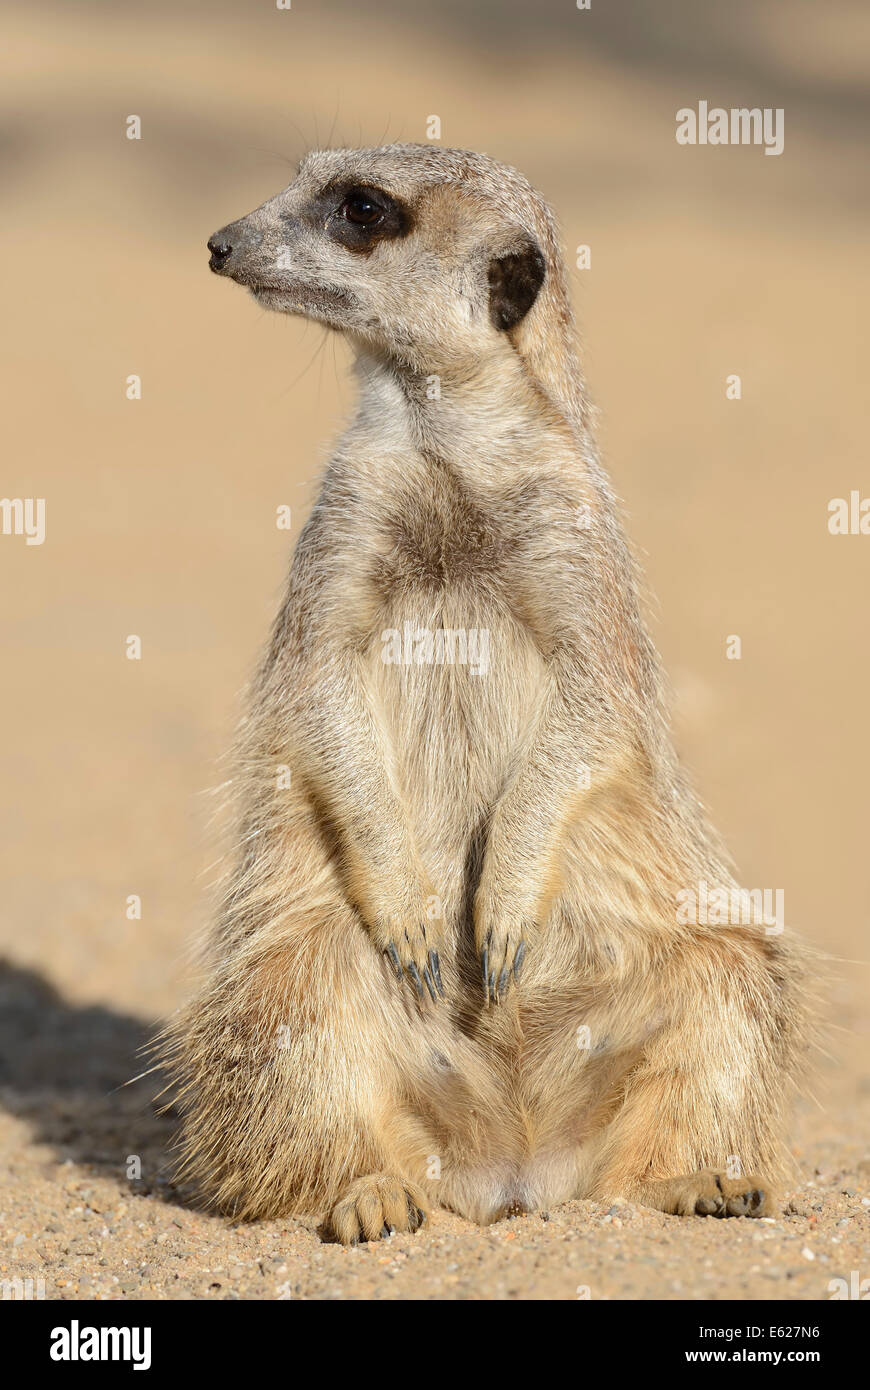 Meerkat or Suricate (Suricata suricatta) Stock Photo